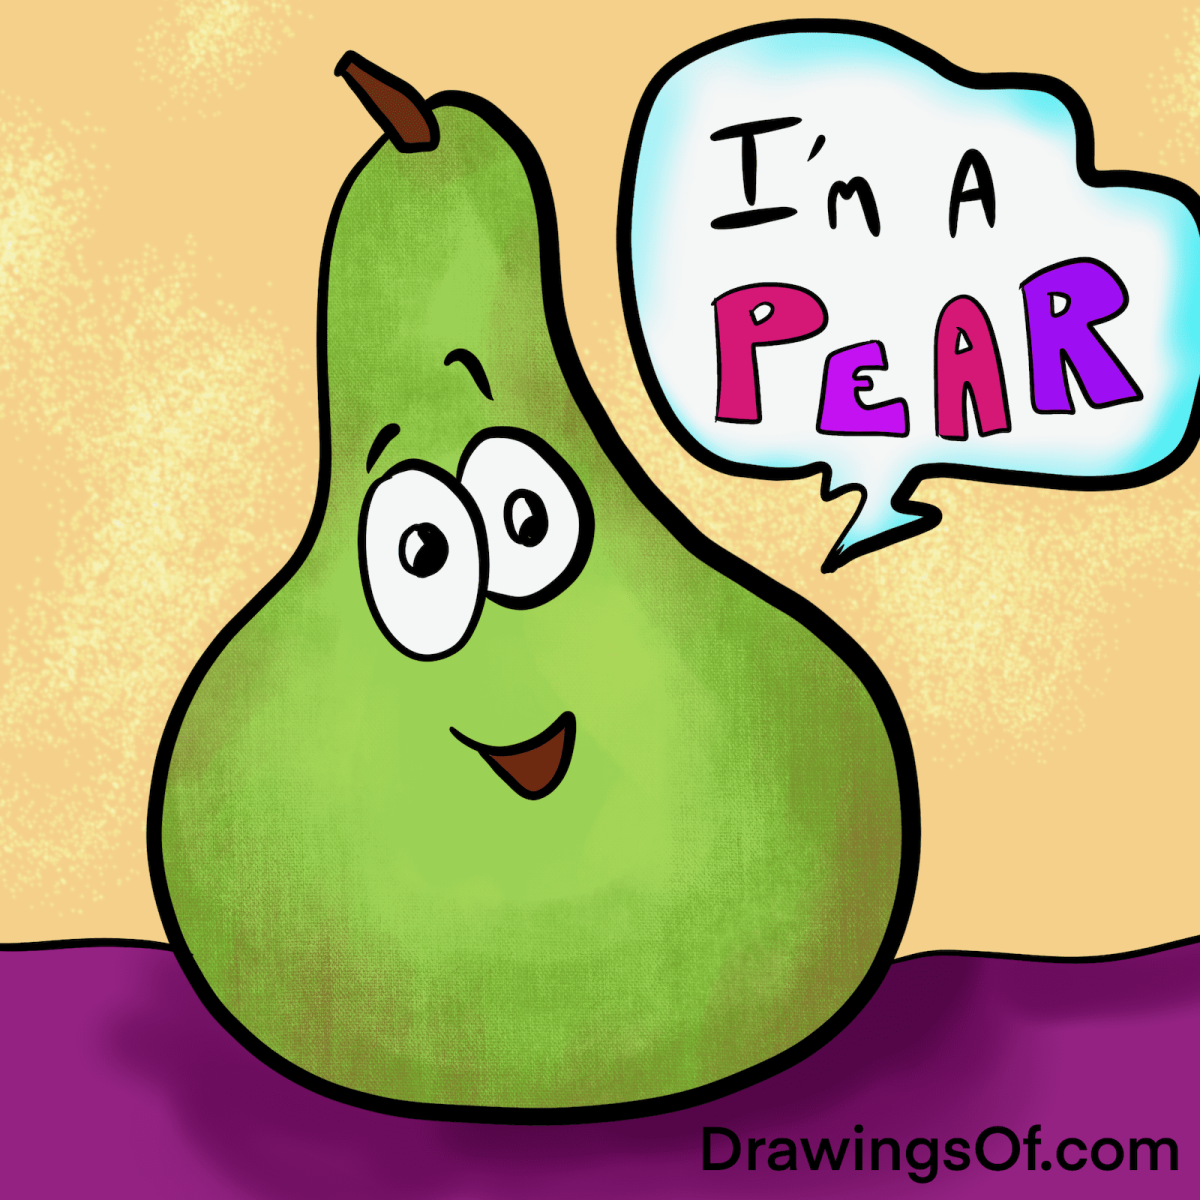 Pear cartoon